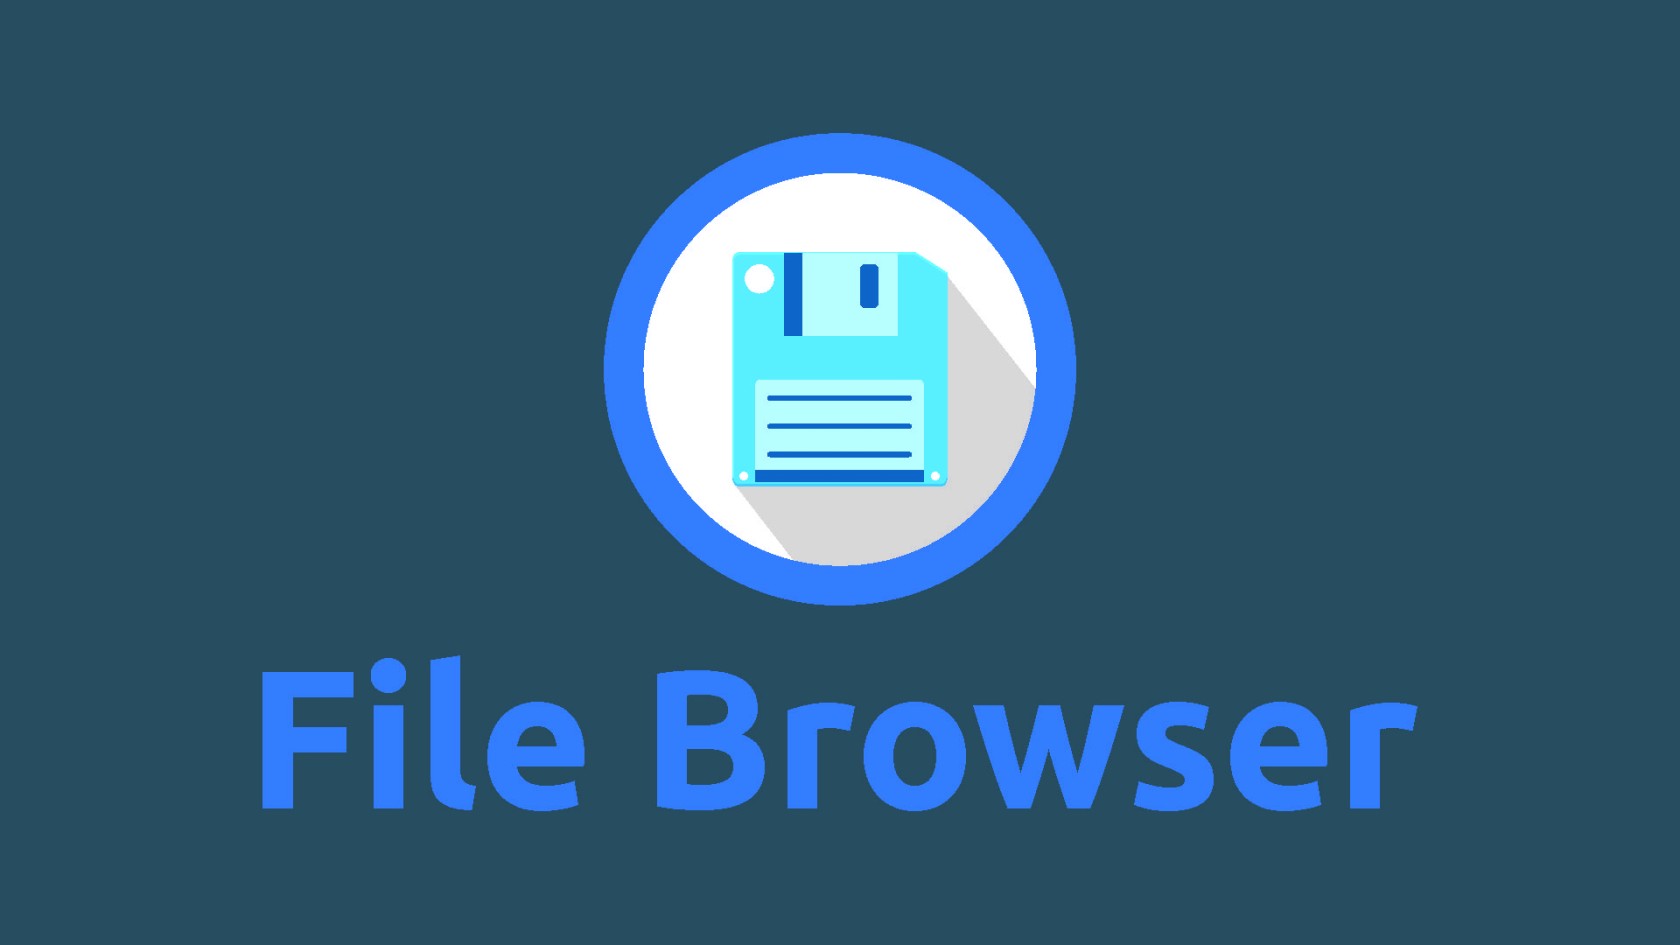 filebrowser-logo.jpg